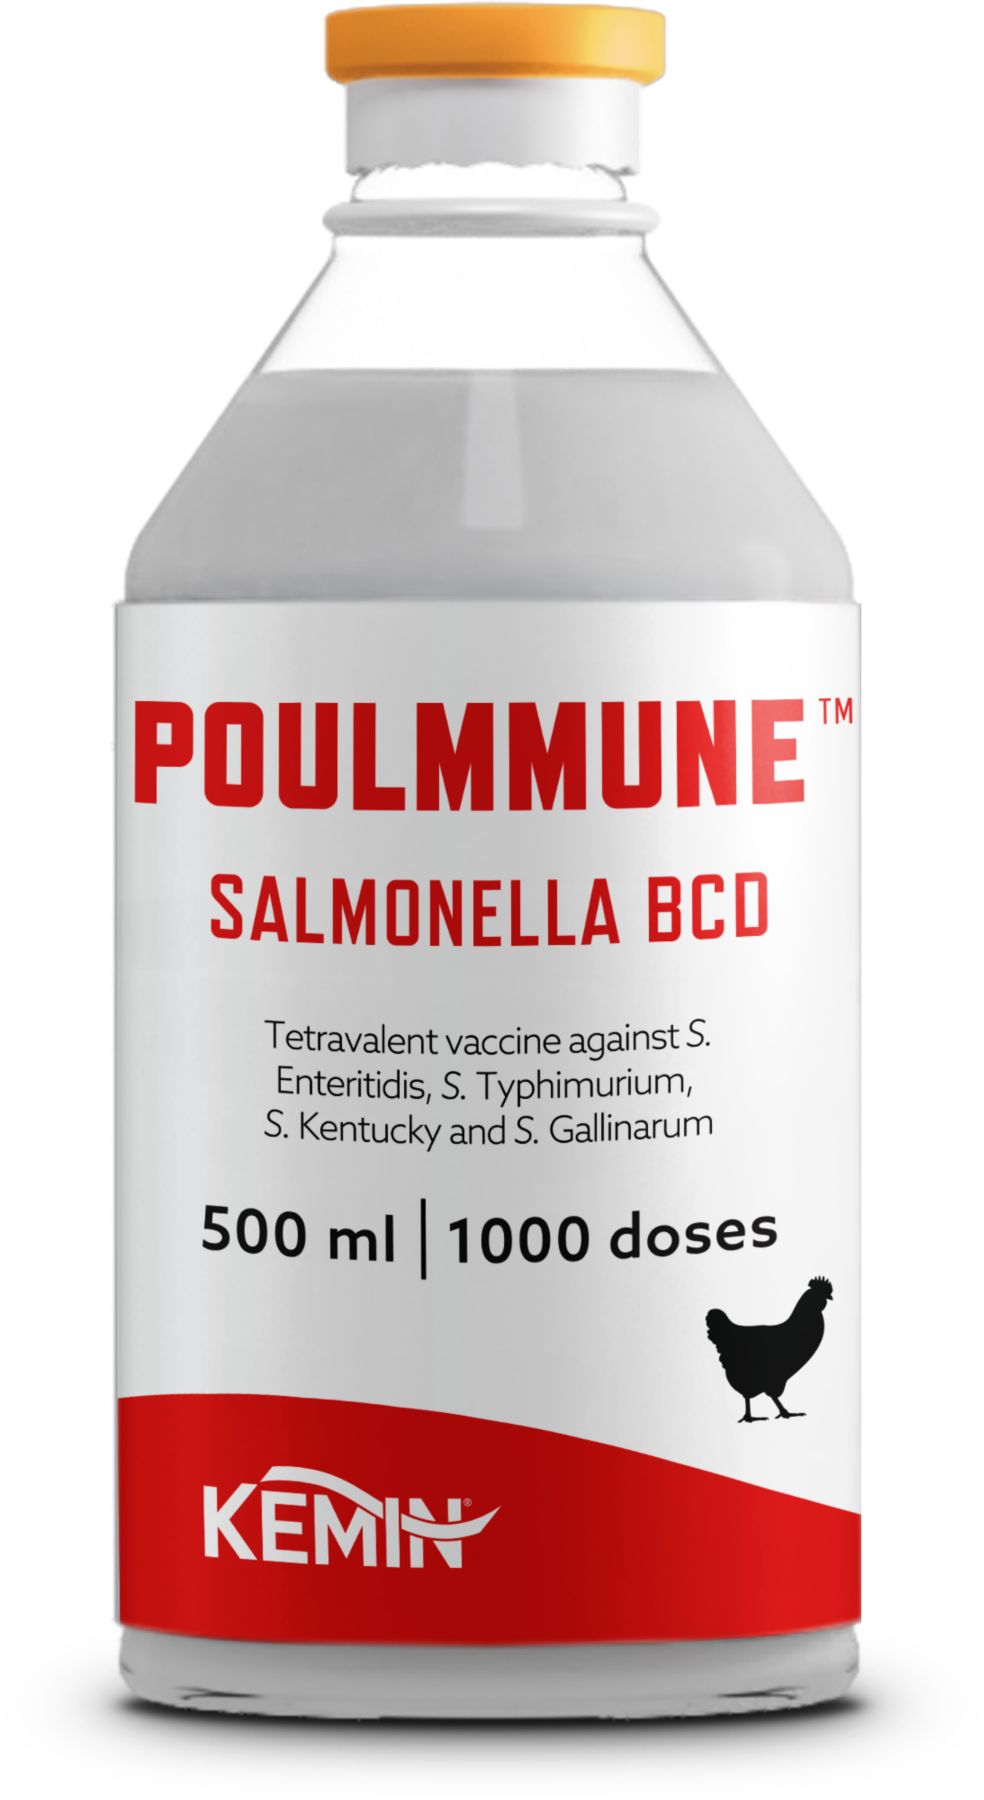 POULMMUNE-SALMONELLA-BCD-big-label-mockup